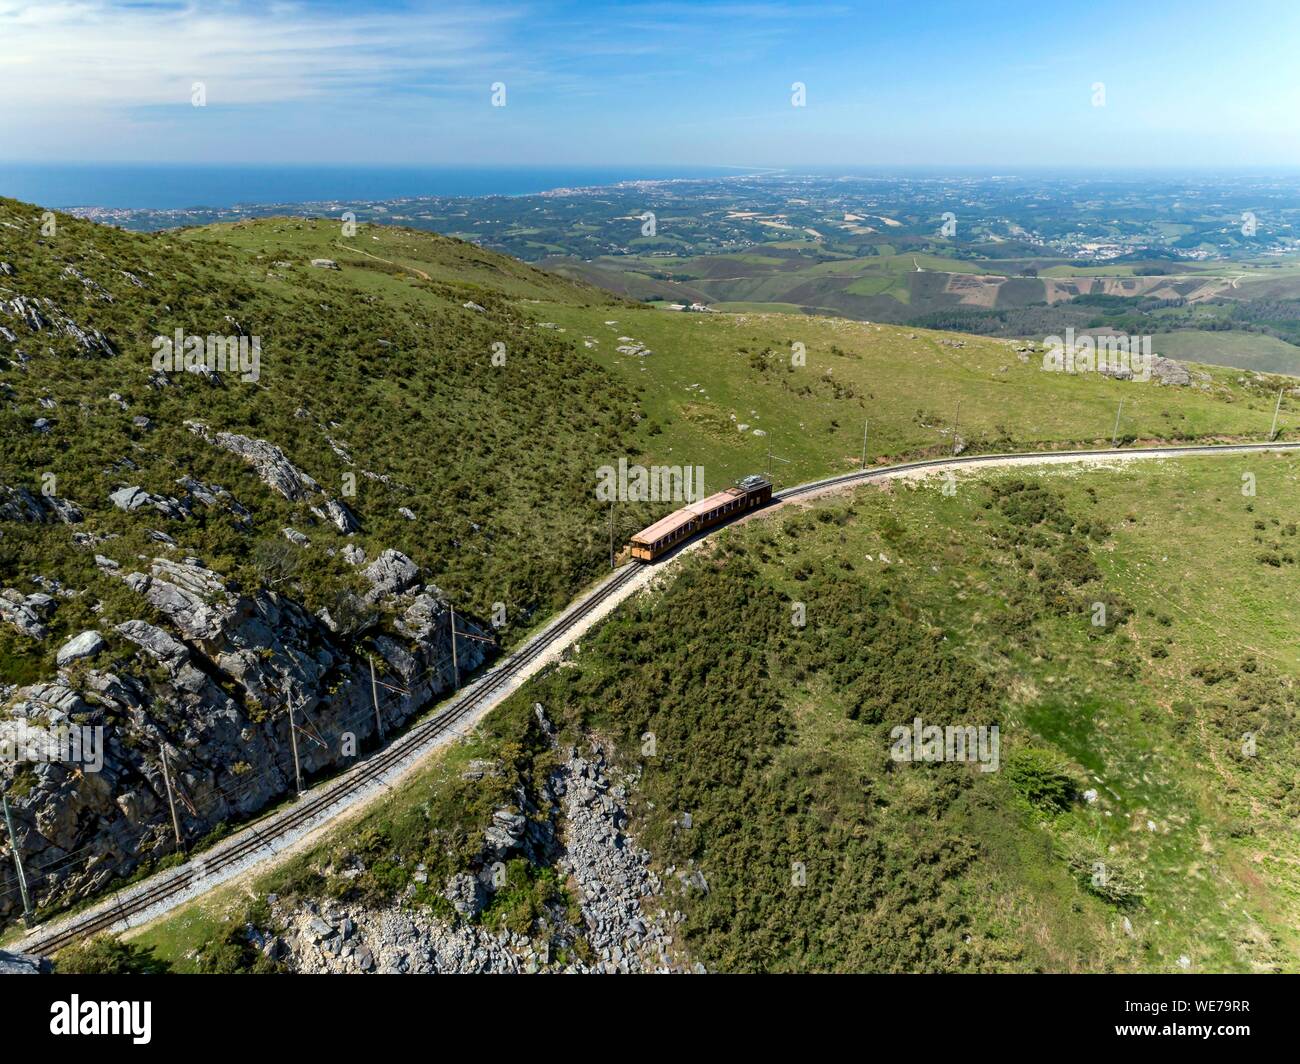 France, Pyrenees Atlantiques, Basque Country, Ascain, La Rhune, the Rhune train, little cog railway (aerial view) Stock Photo